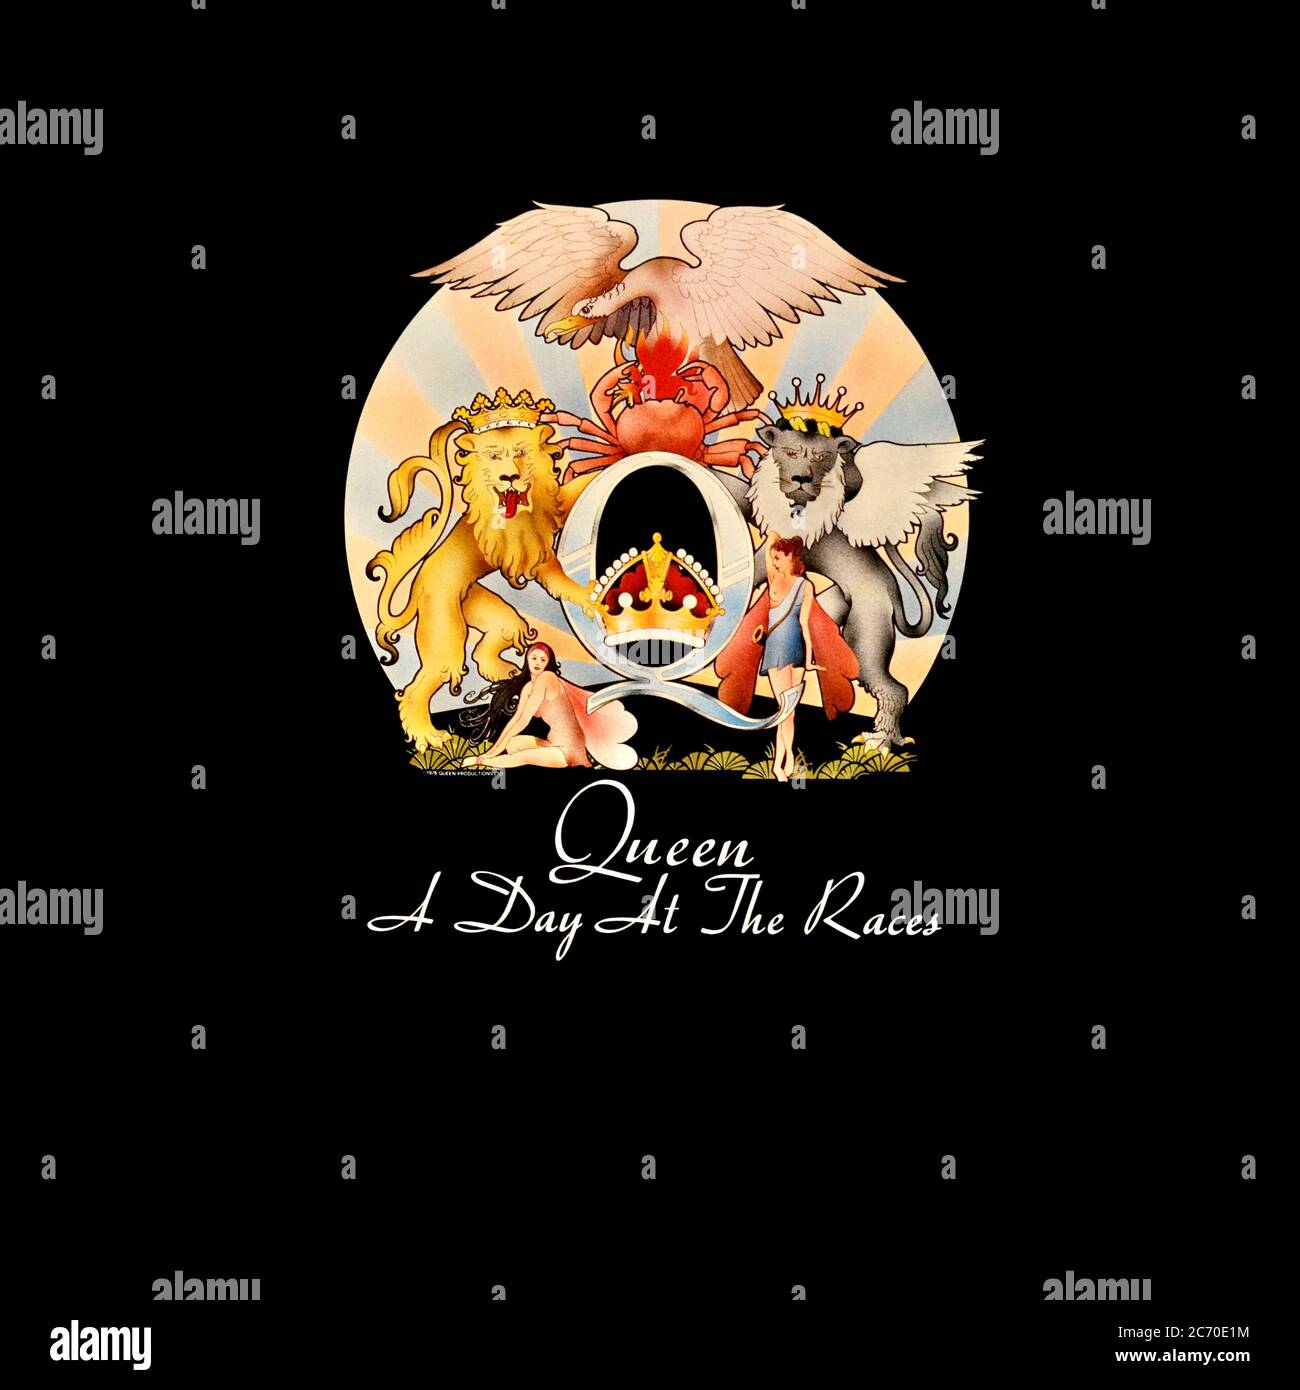 Queen - original Vinyl Album Cover - A Day At The Races - 1976 Stockfoto